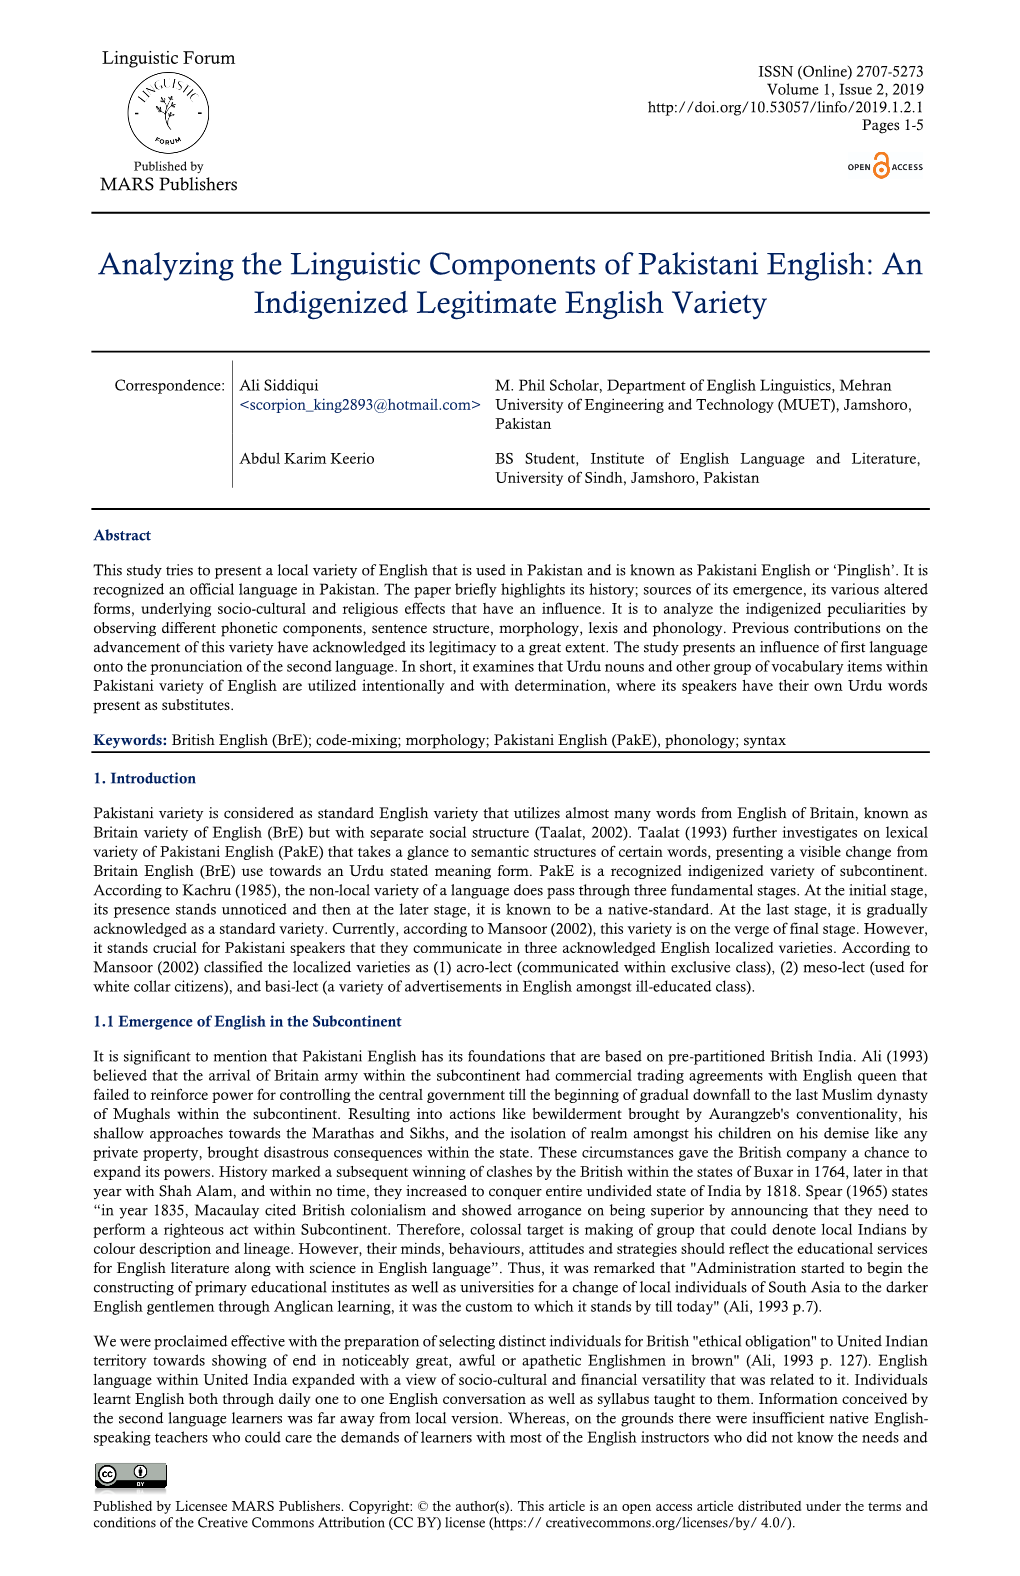 Analyzing the Linguistic Components of Pakistani English: an Indigenized Legitimate English Variety